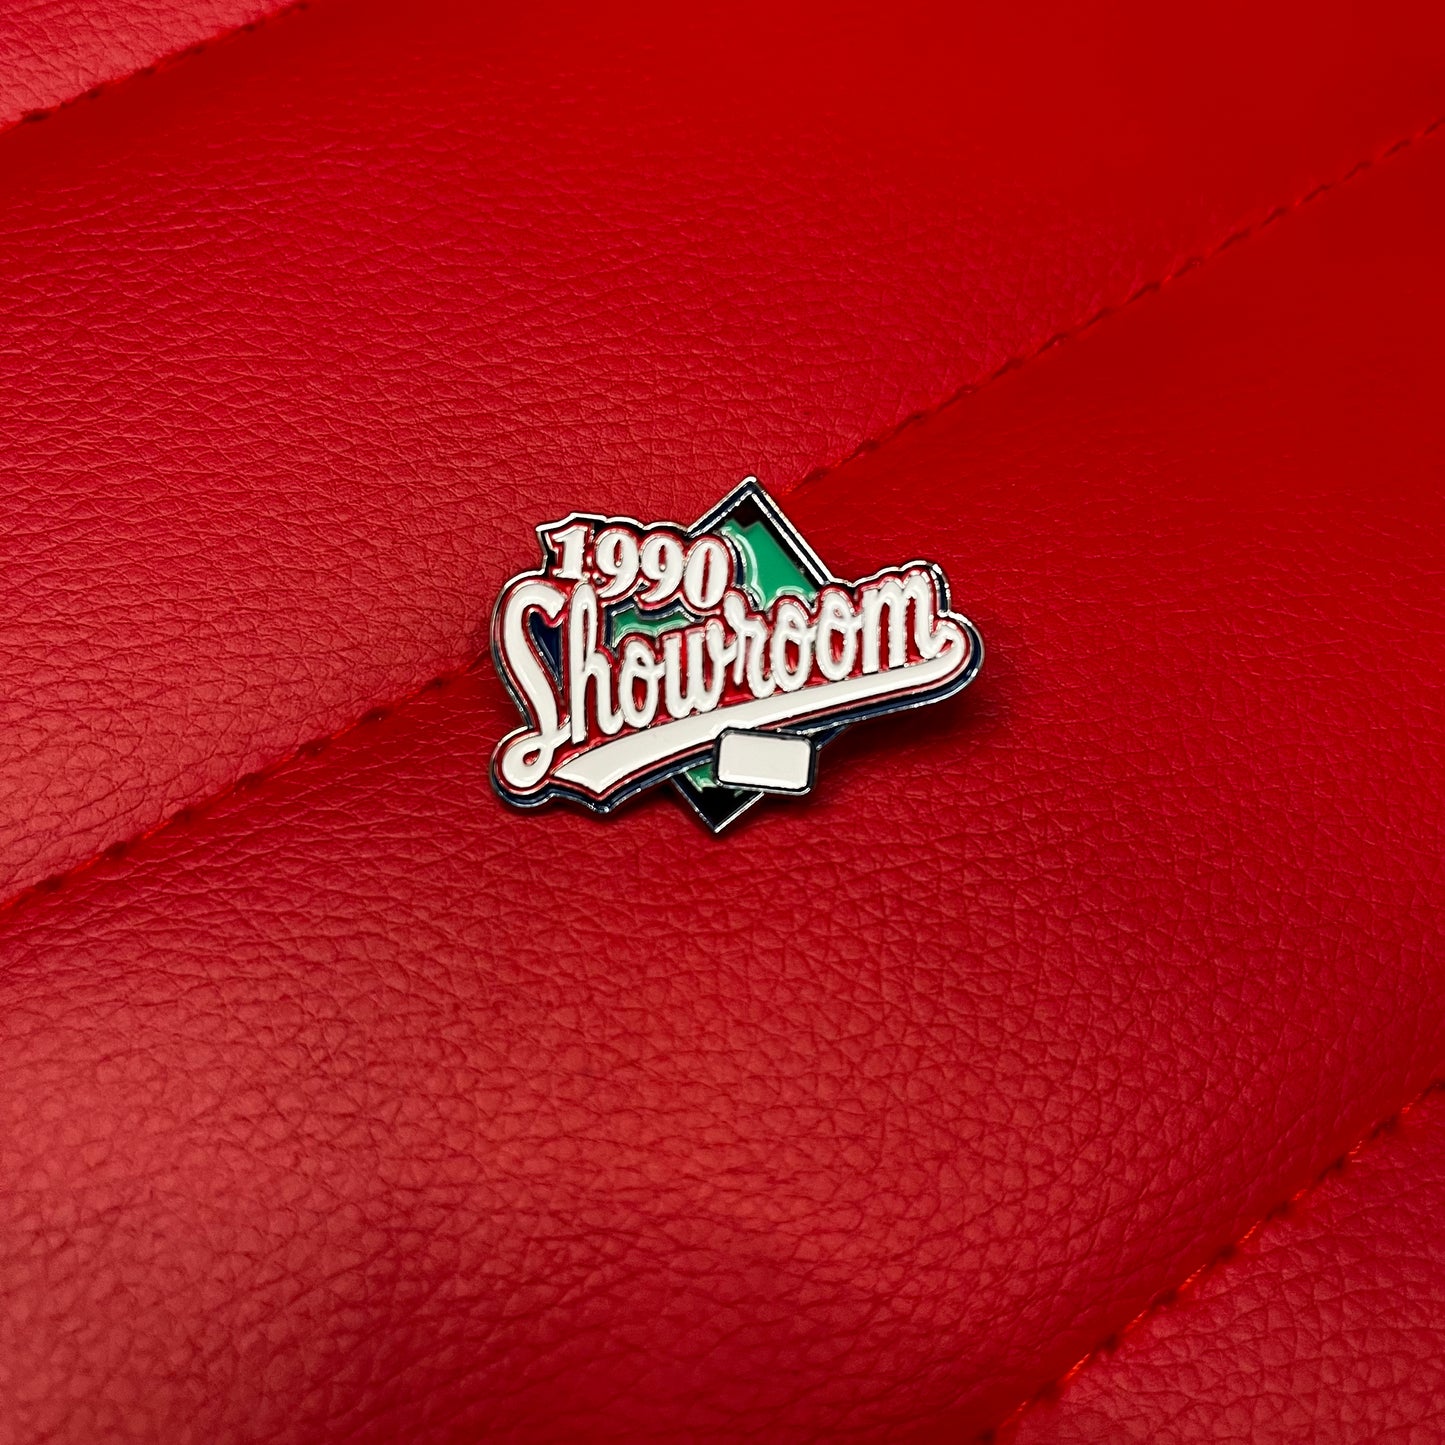 Showroom “1990” pin